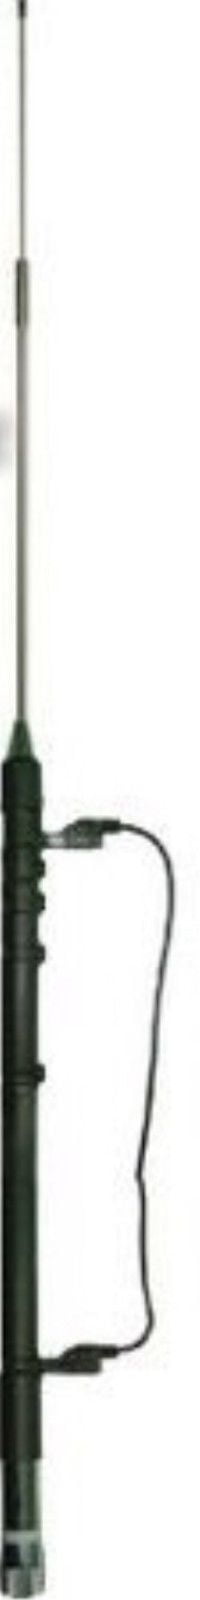 OPEK HVT-600 HF/VHF 10 Band Mobile Antenna pic